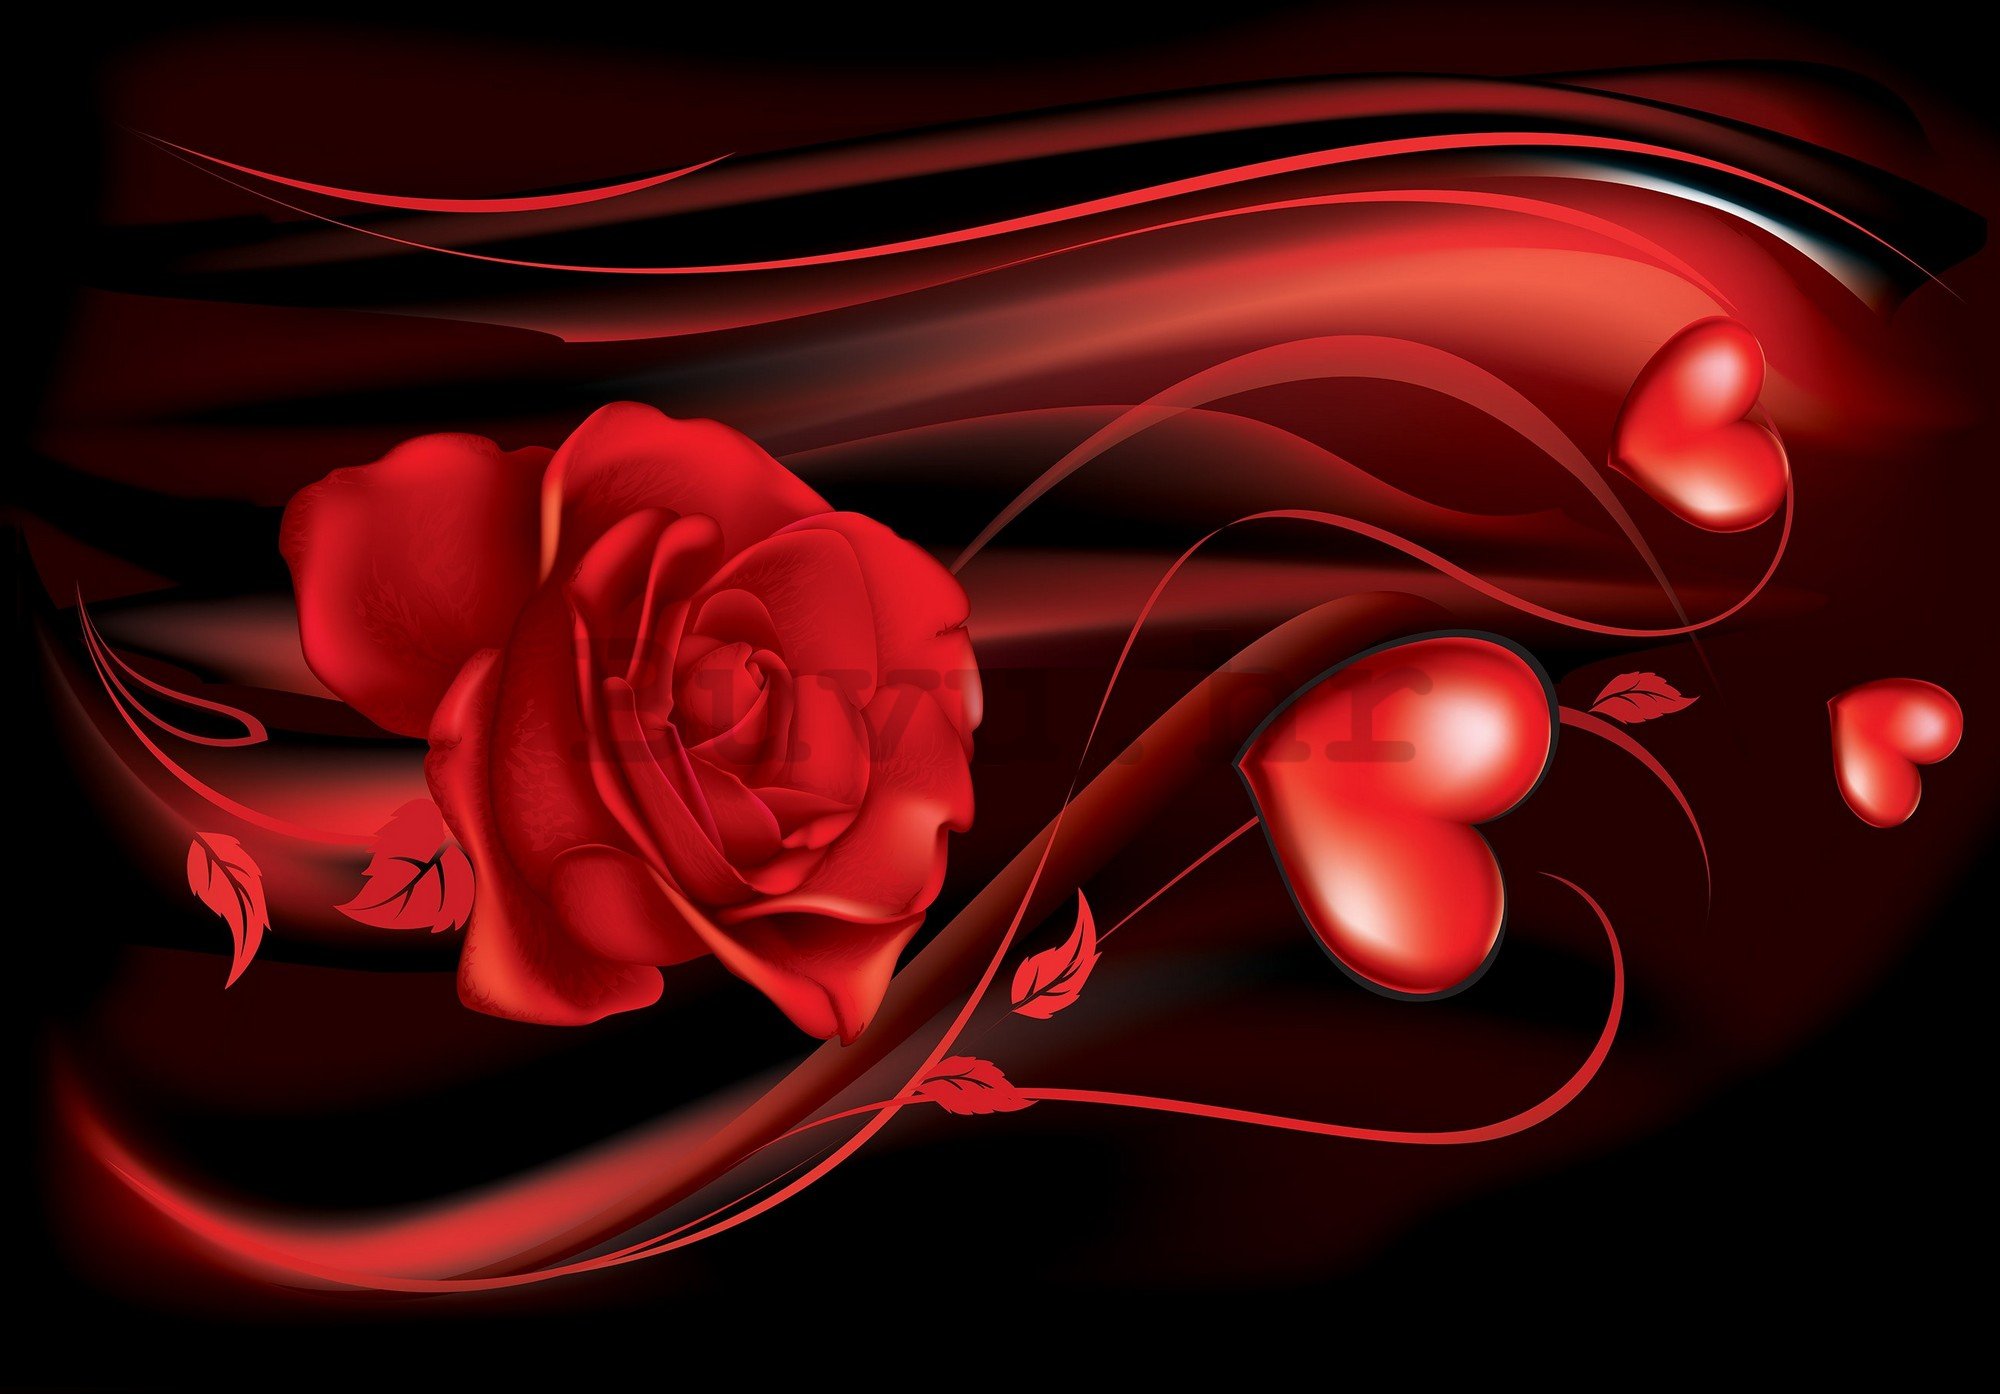 Foto tapeta: Crveno srce i ruža - 254x184 cm